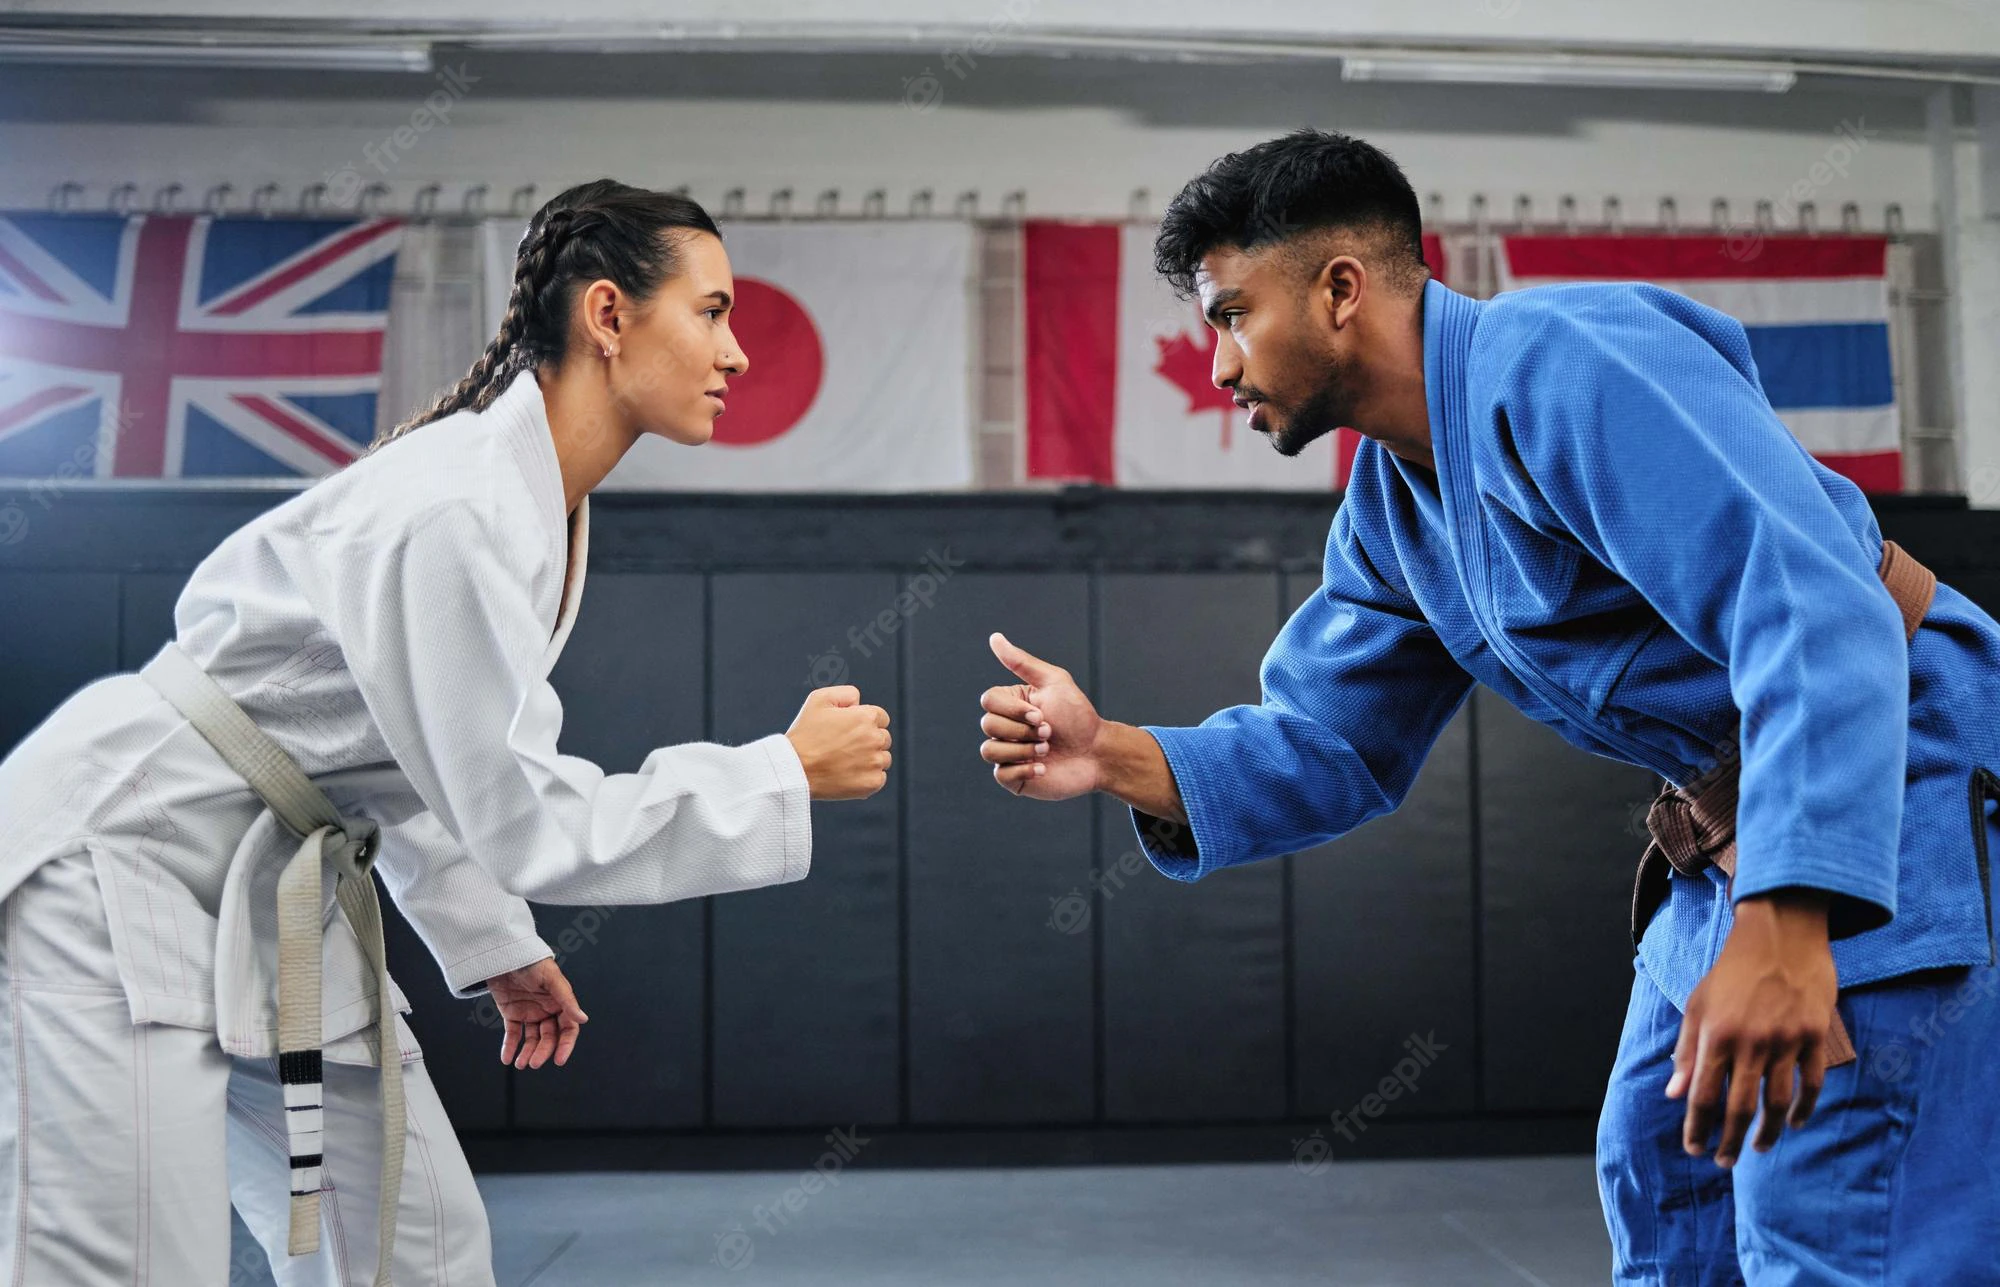 MMA vs Karate